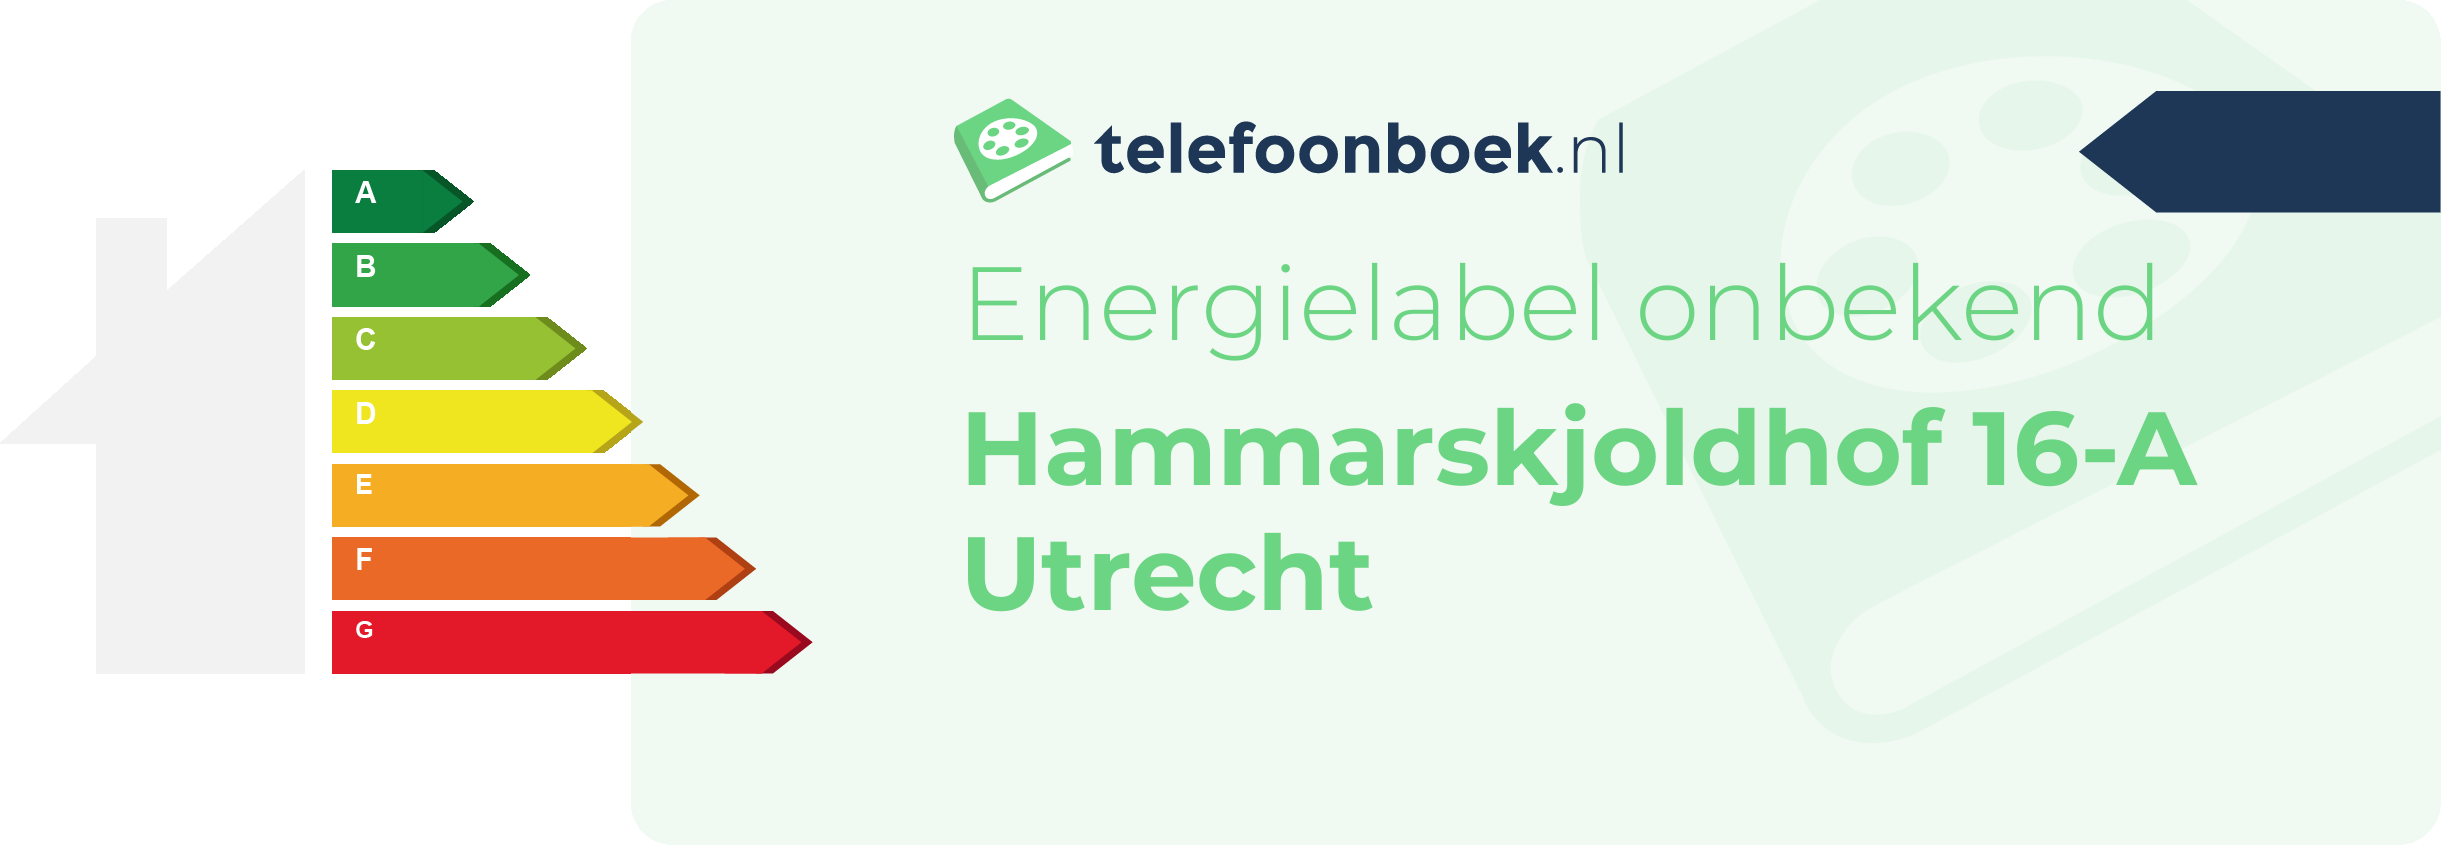 Energielabel Hammarskjoldhof 16-A Utrecht